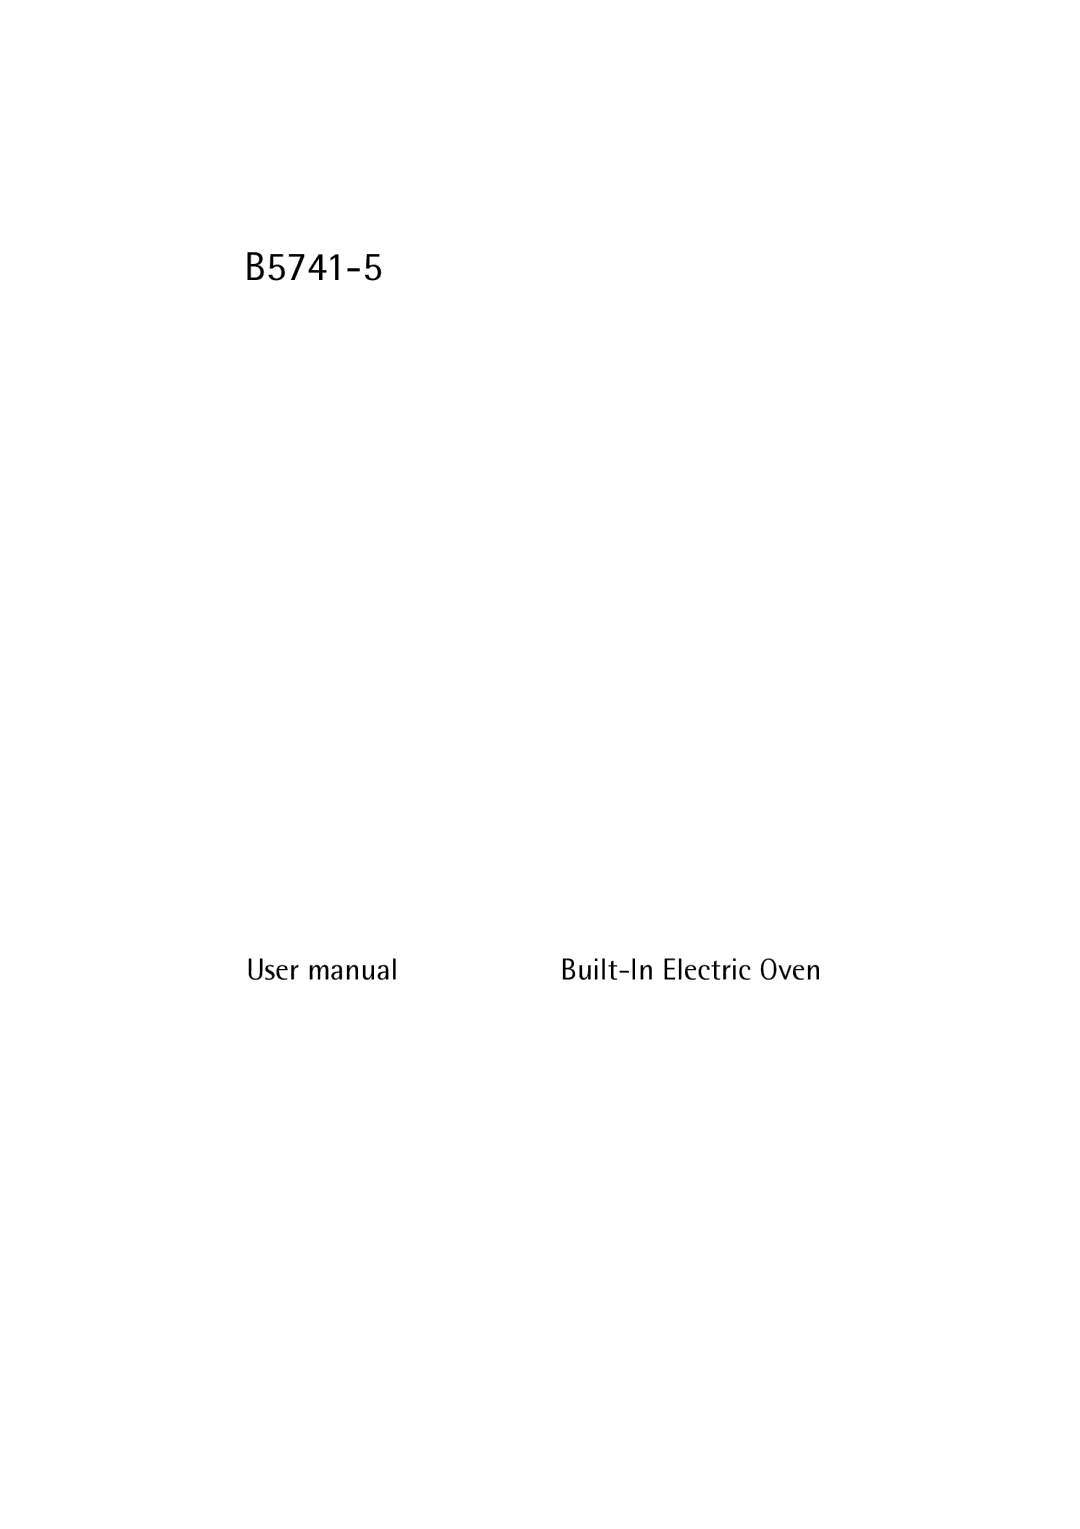 Electrolux B57415A, B57415B user manual B5741-5 